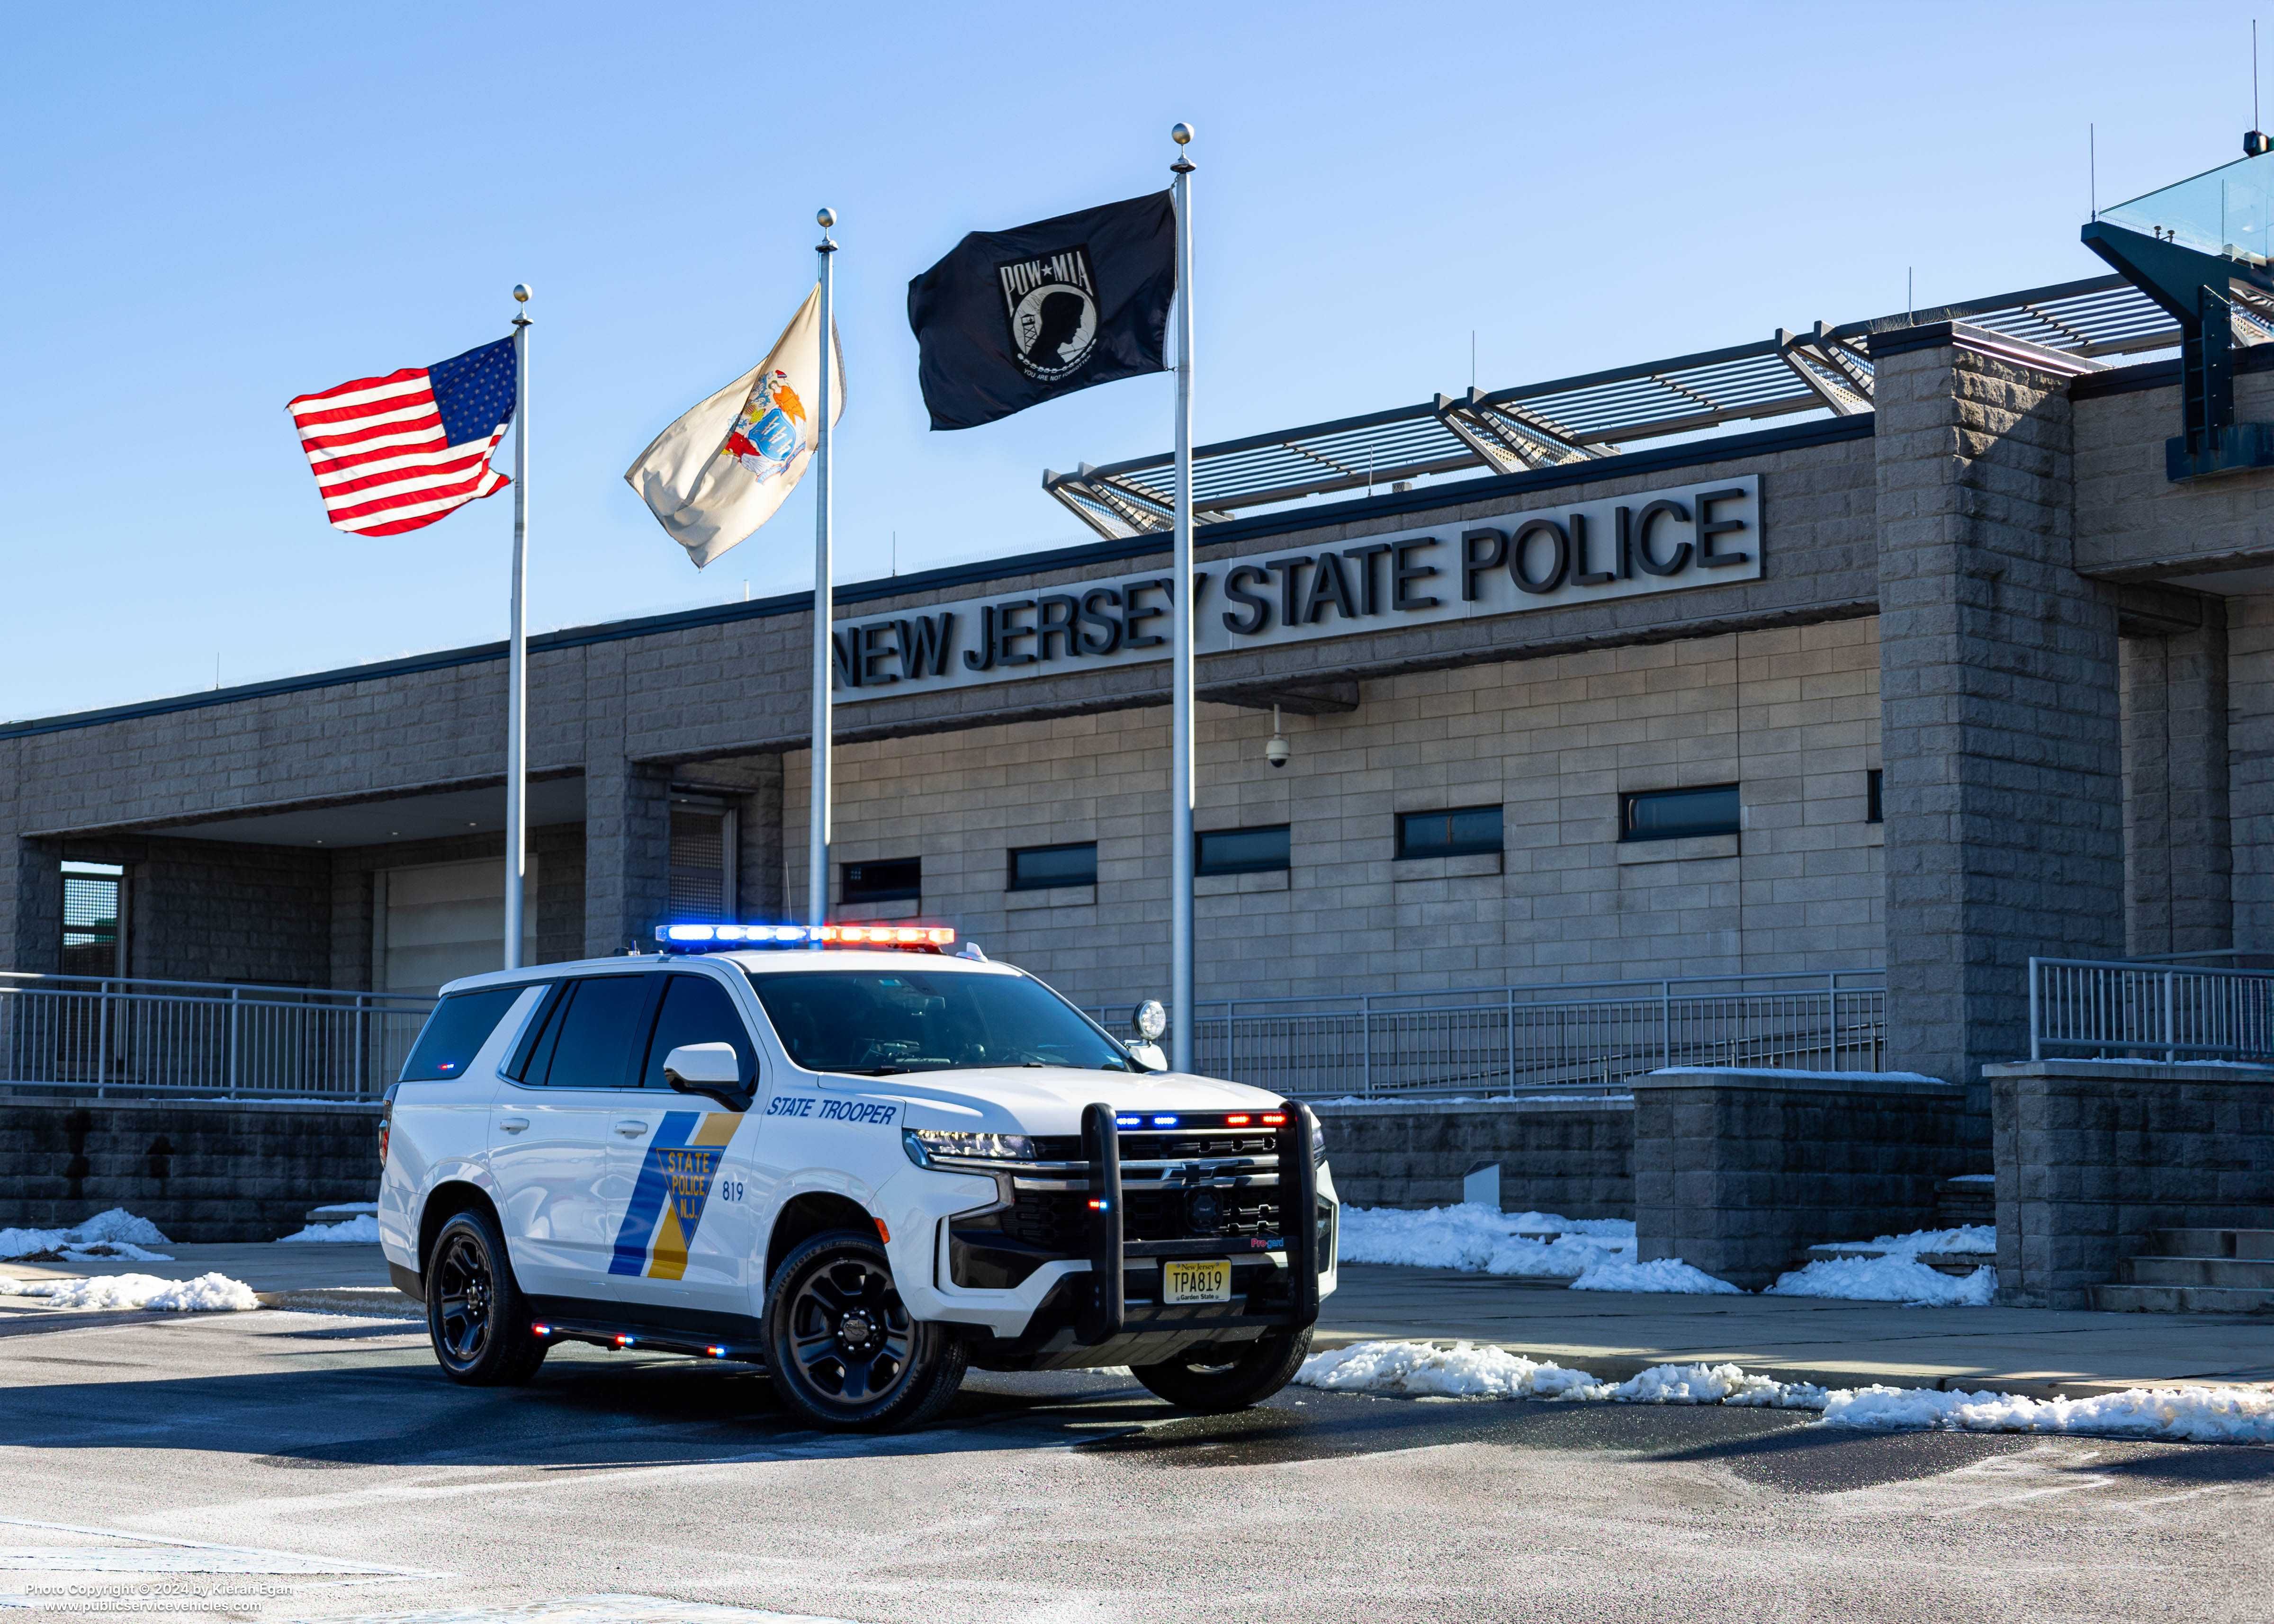 A photo  of New Jersey State Police
            Cruiser 819, a 2022 Chevrolet Tahoe             taken by Kieran Egan